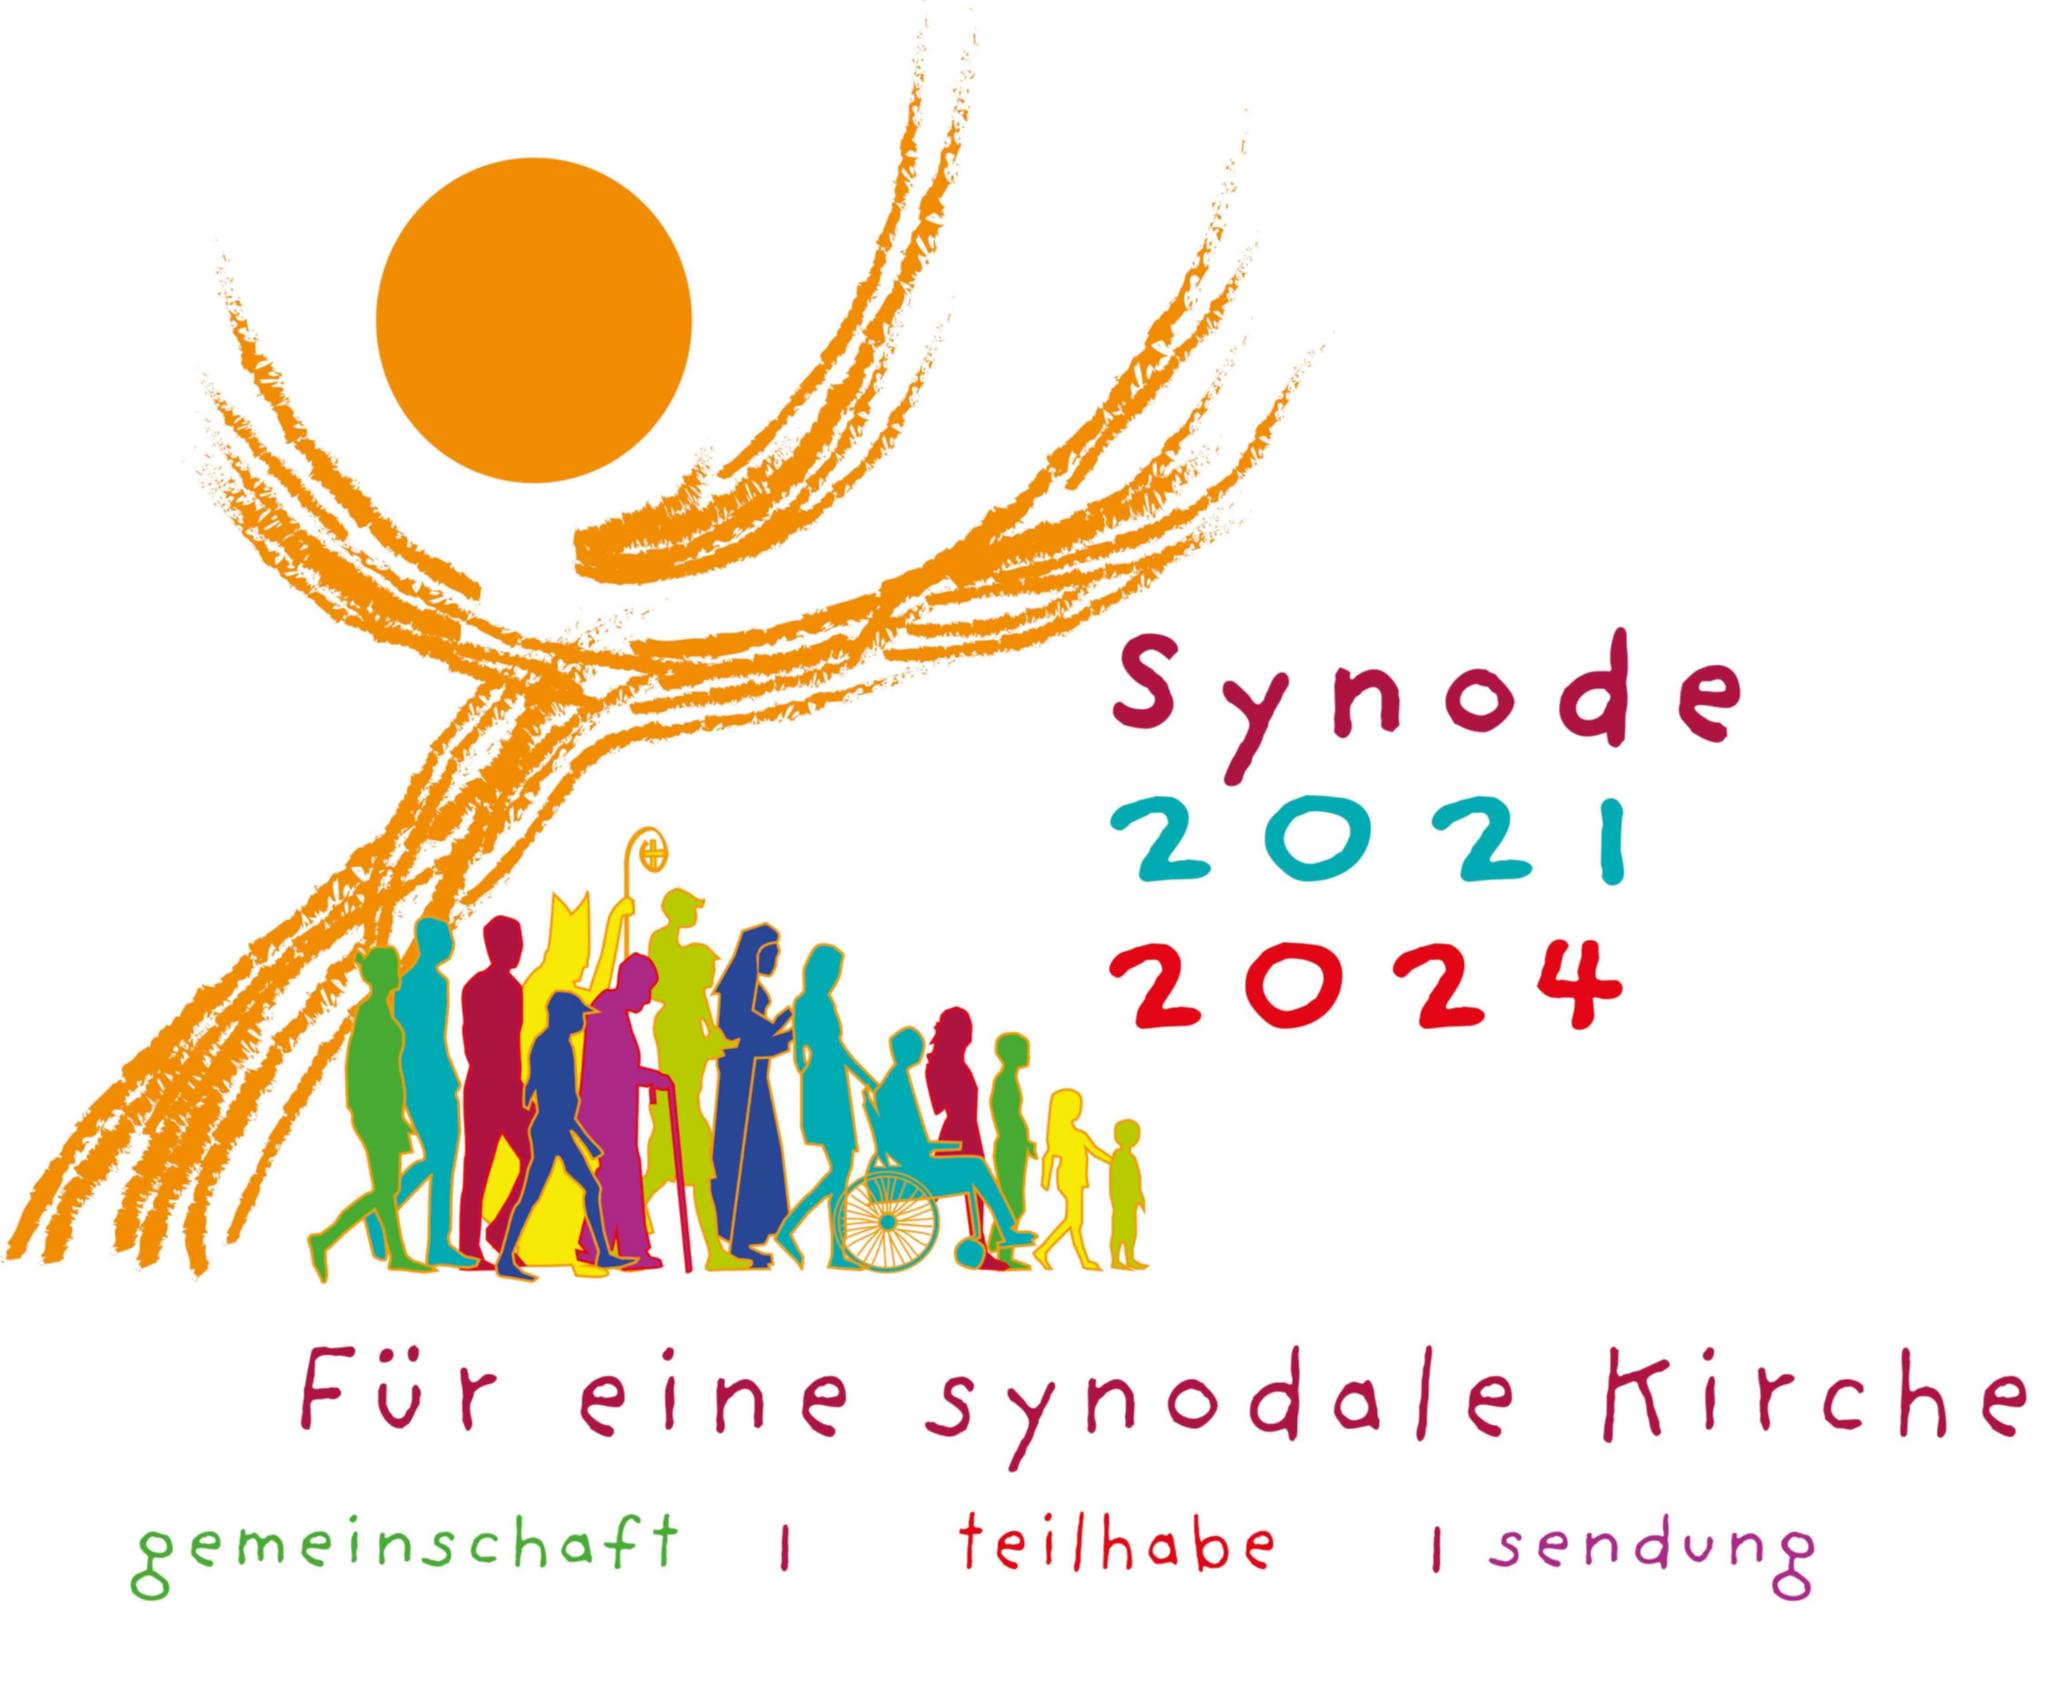 Bischofssynode-2021-2024-LOGO